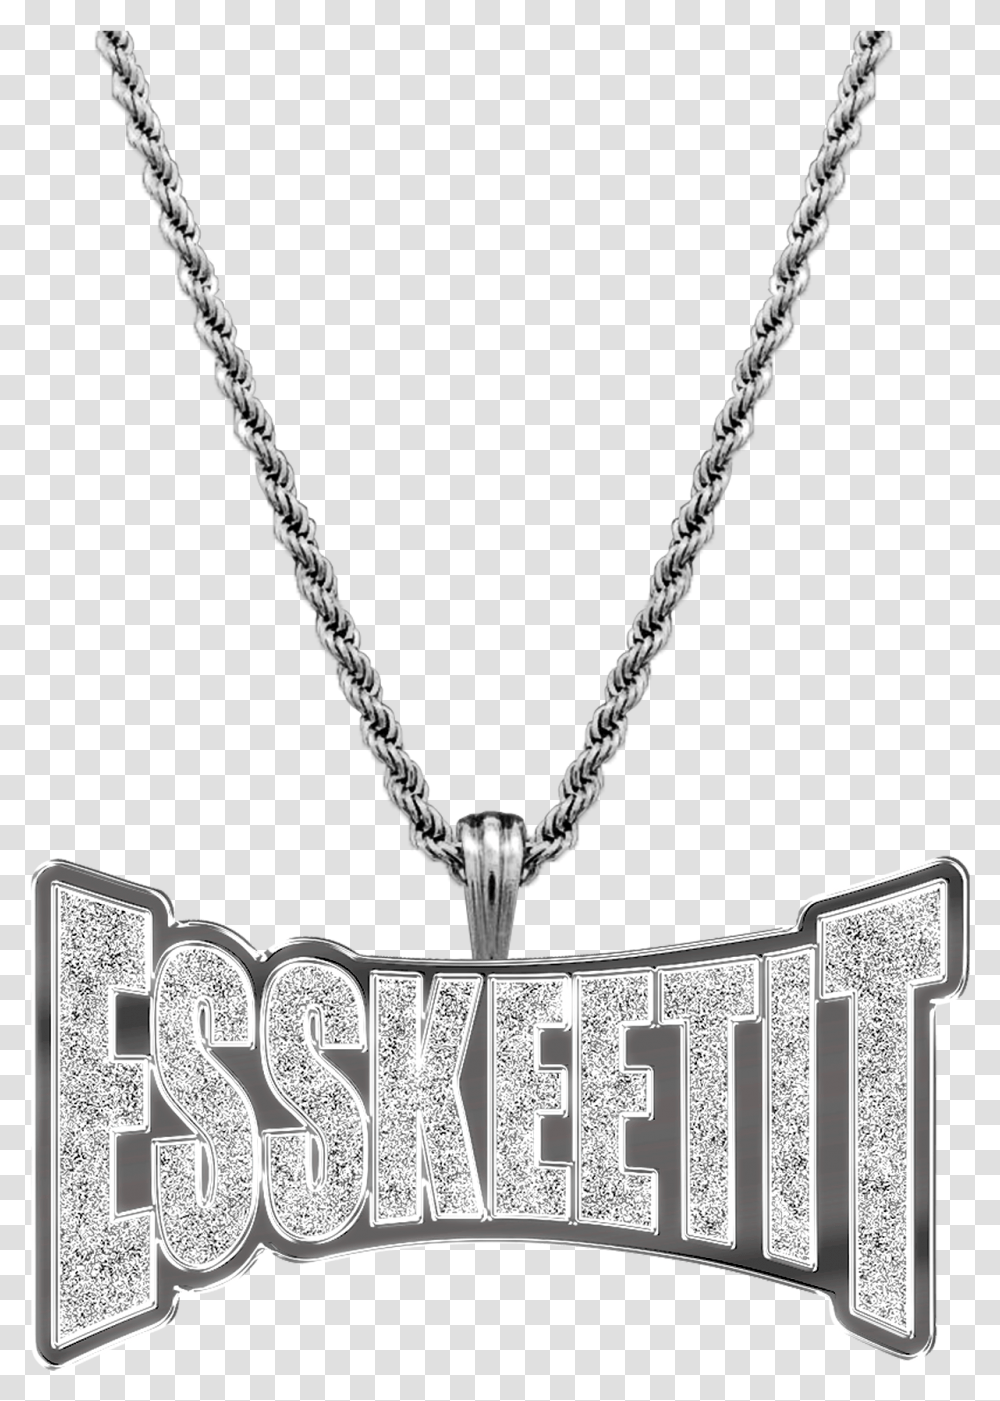 Lil Pump Esskeetit Chain, Pendant, Necklace, Jewelry, Accessories Transparent Png